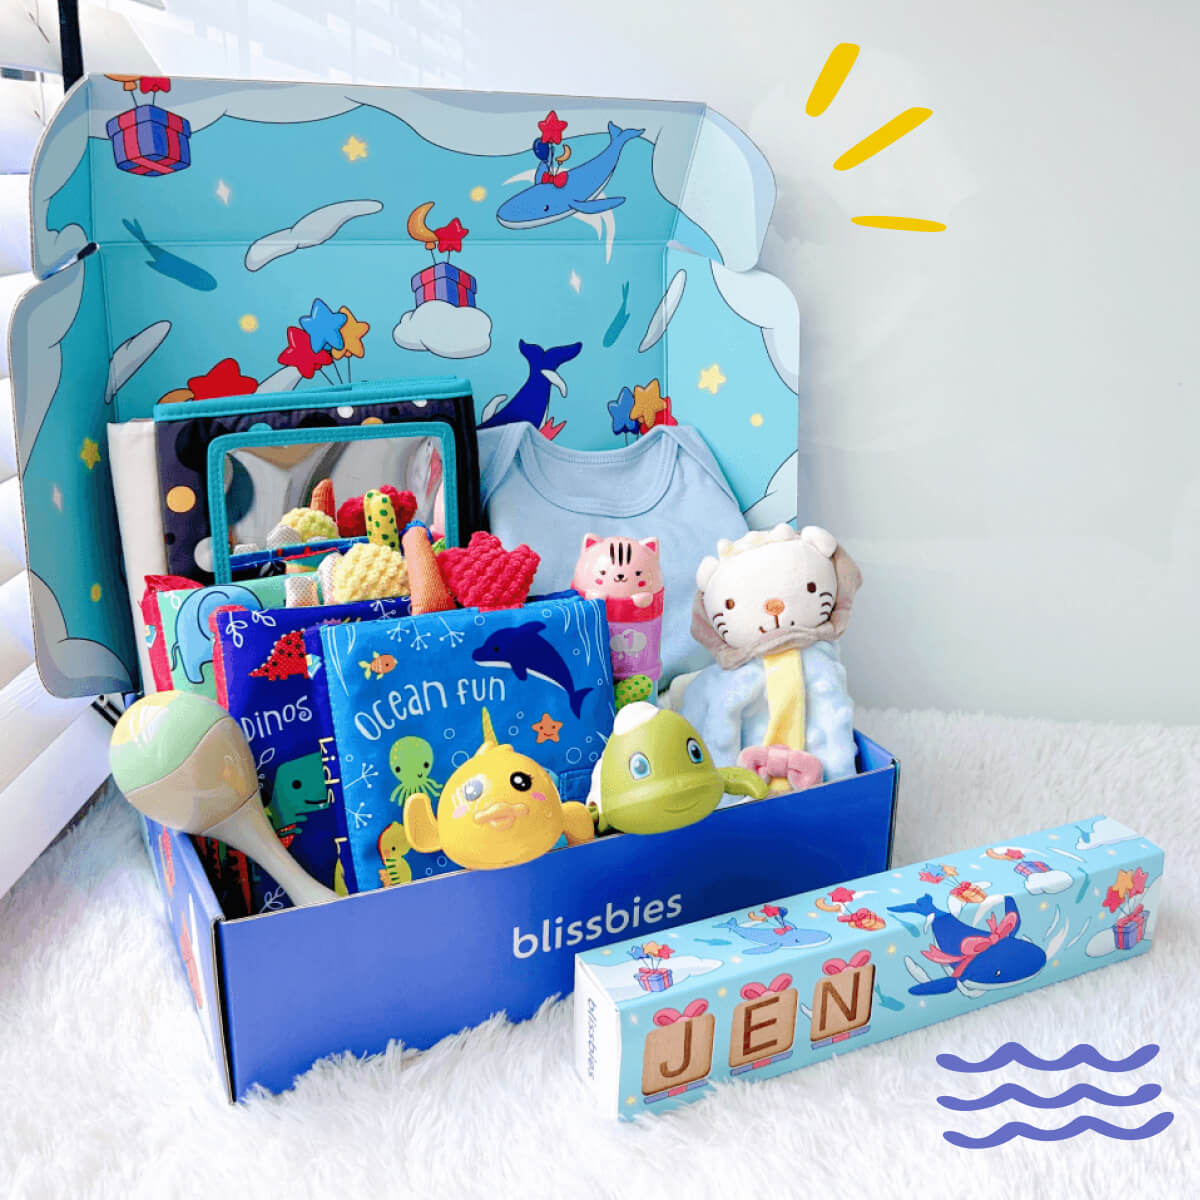 Blissbies personalised baby gift set